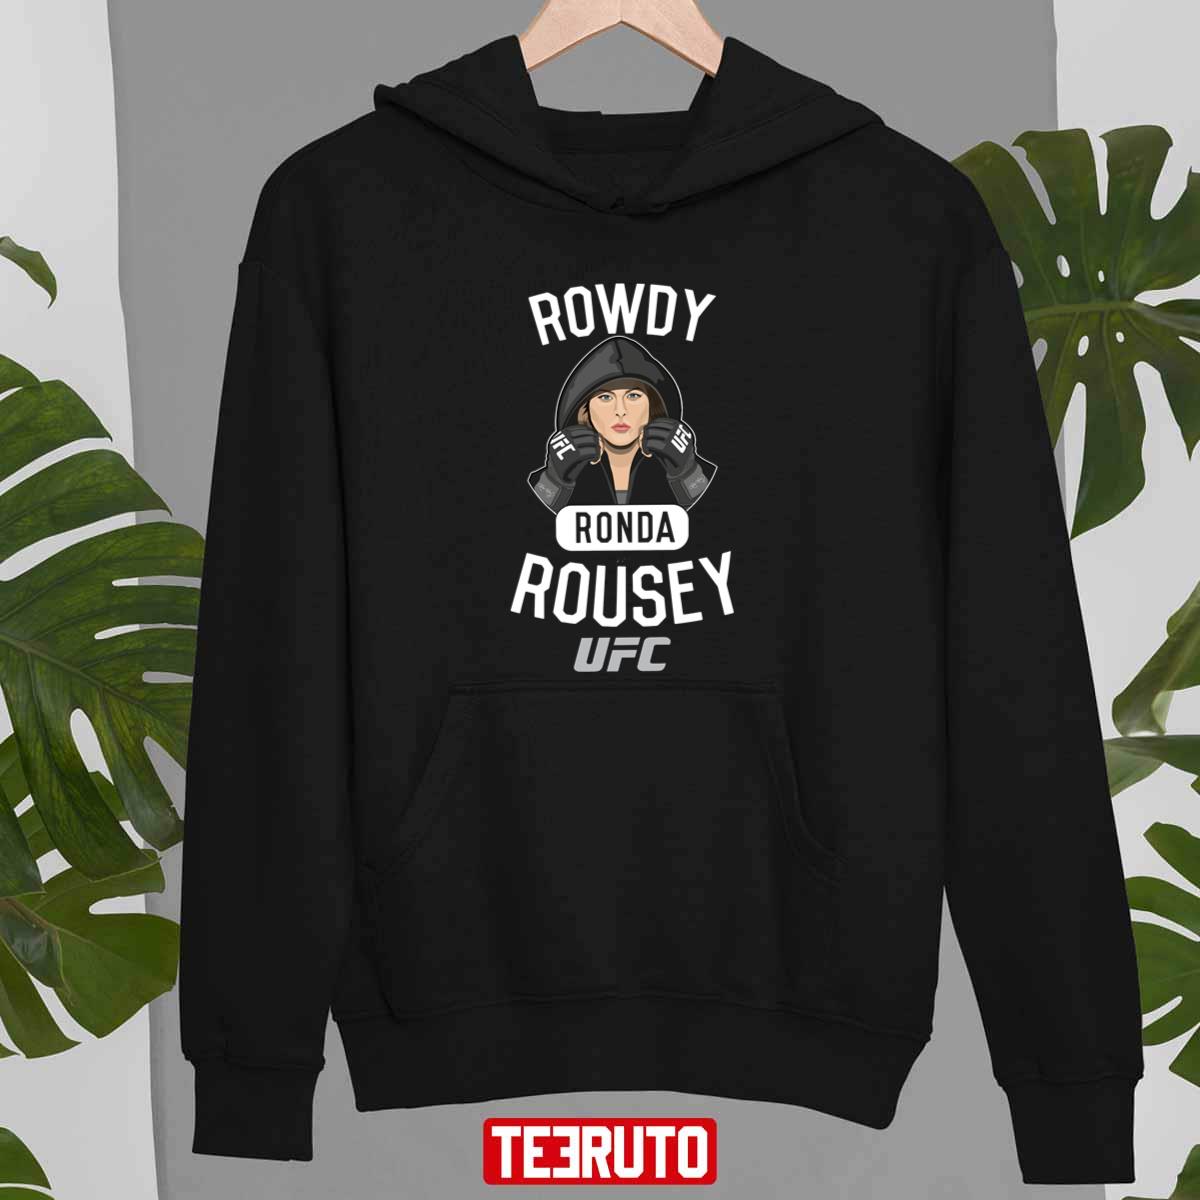 Rowdy Ronda Rousey UFC Black Unisex T-Shirt